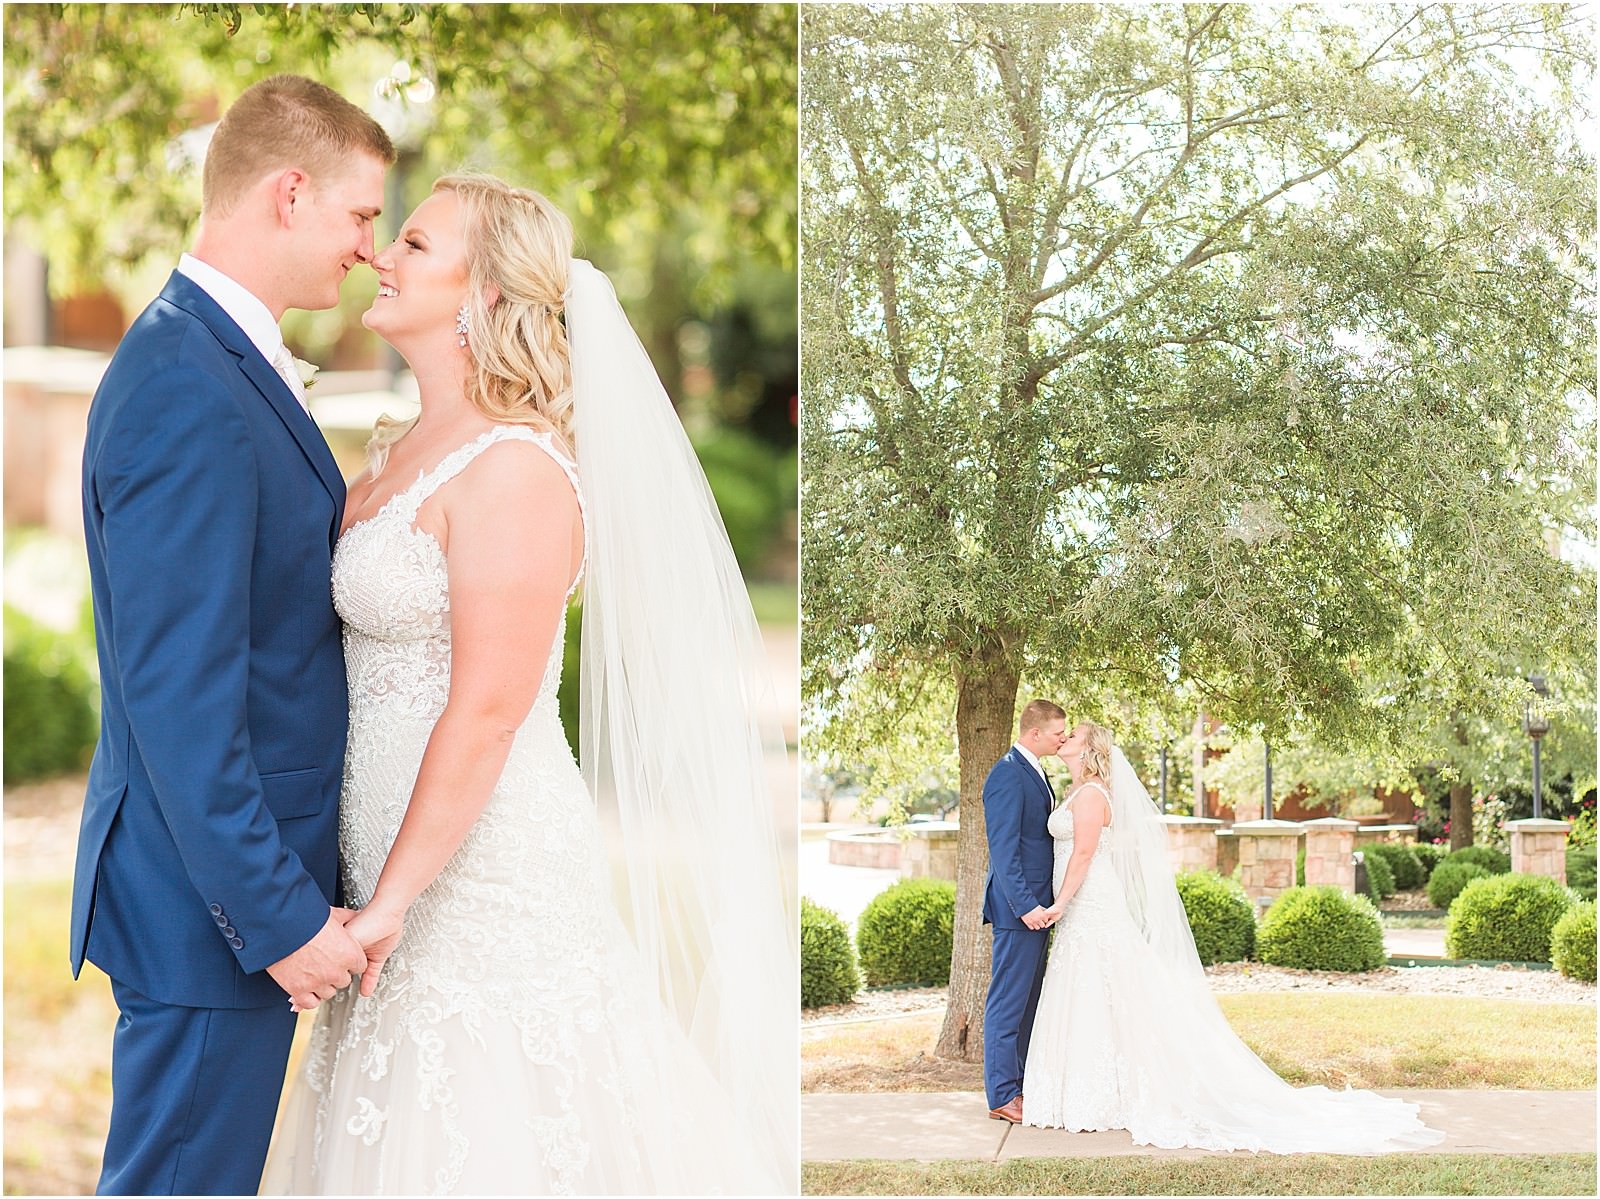 Kelsey and Caleb | Walkers Bluff Winery Wedding | Bret and Brandie Photography044.jpg